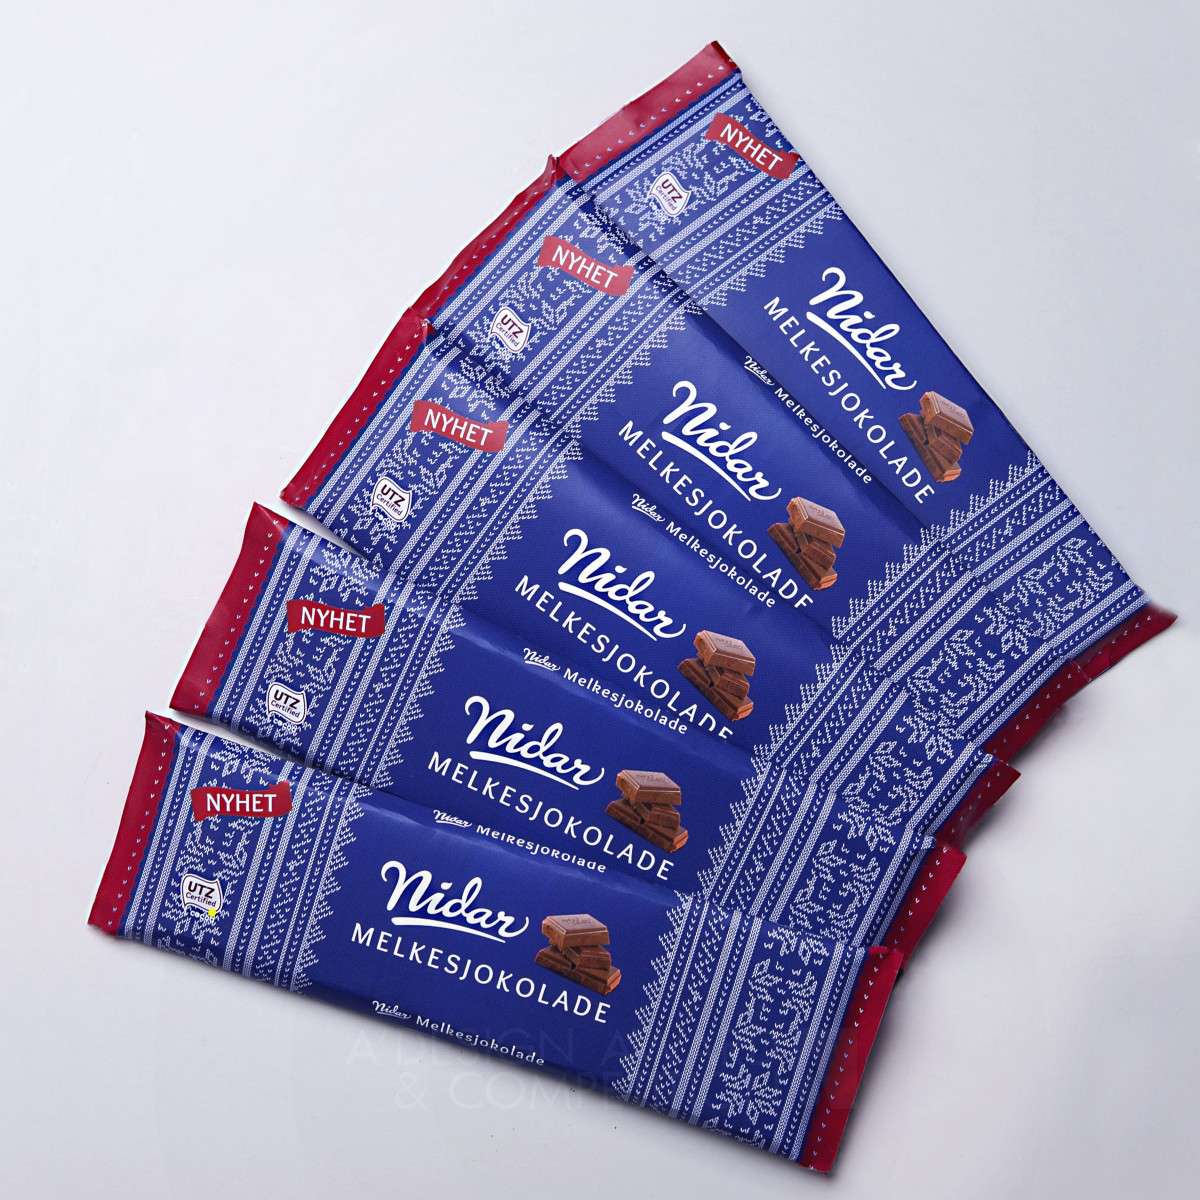 Nidar Sjokolade Chocolate packaging by Stine Strand